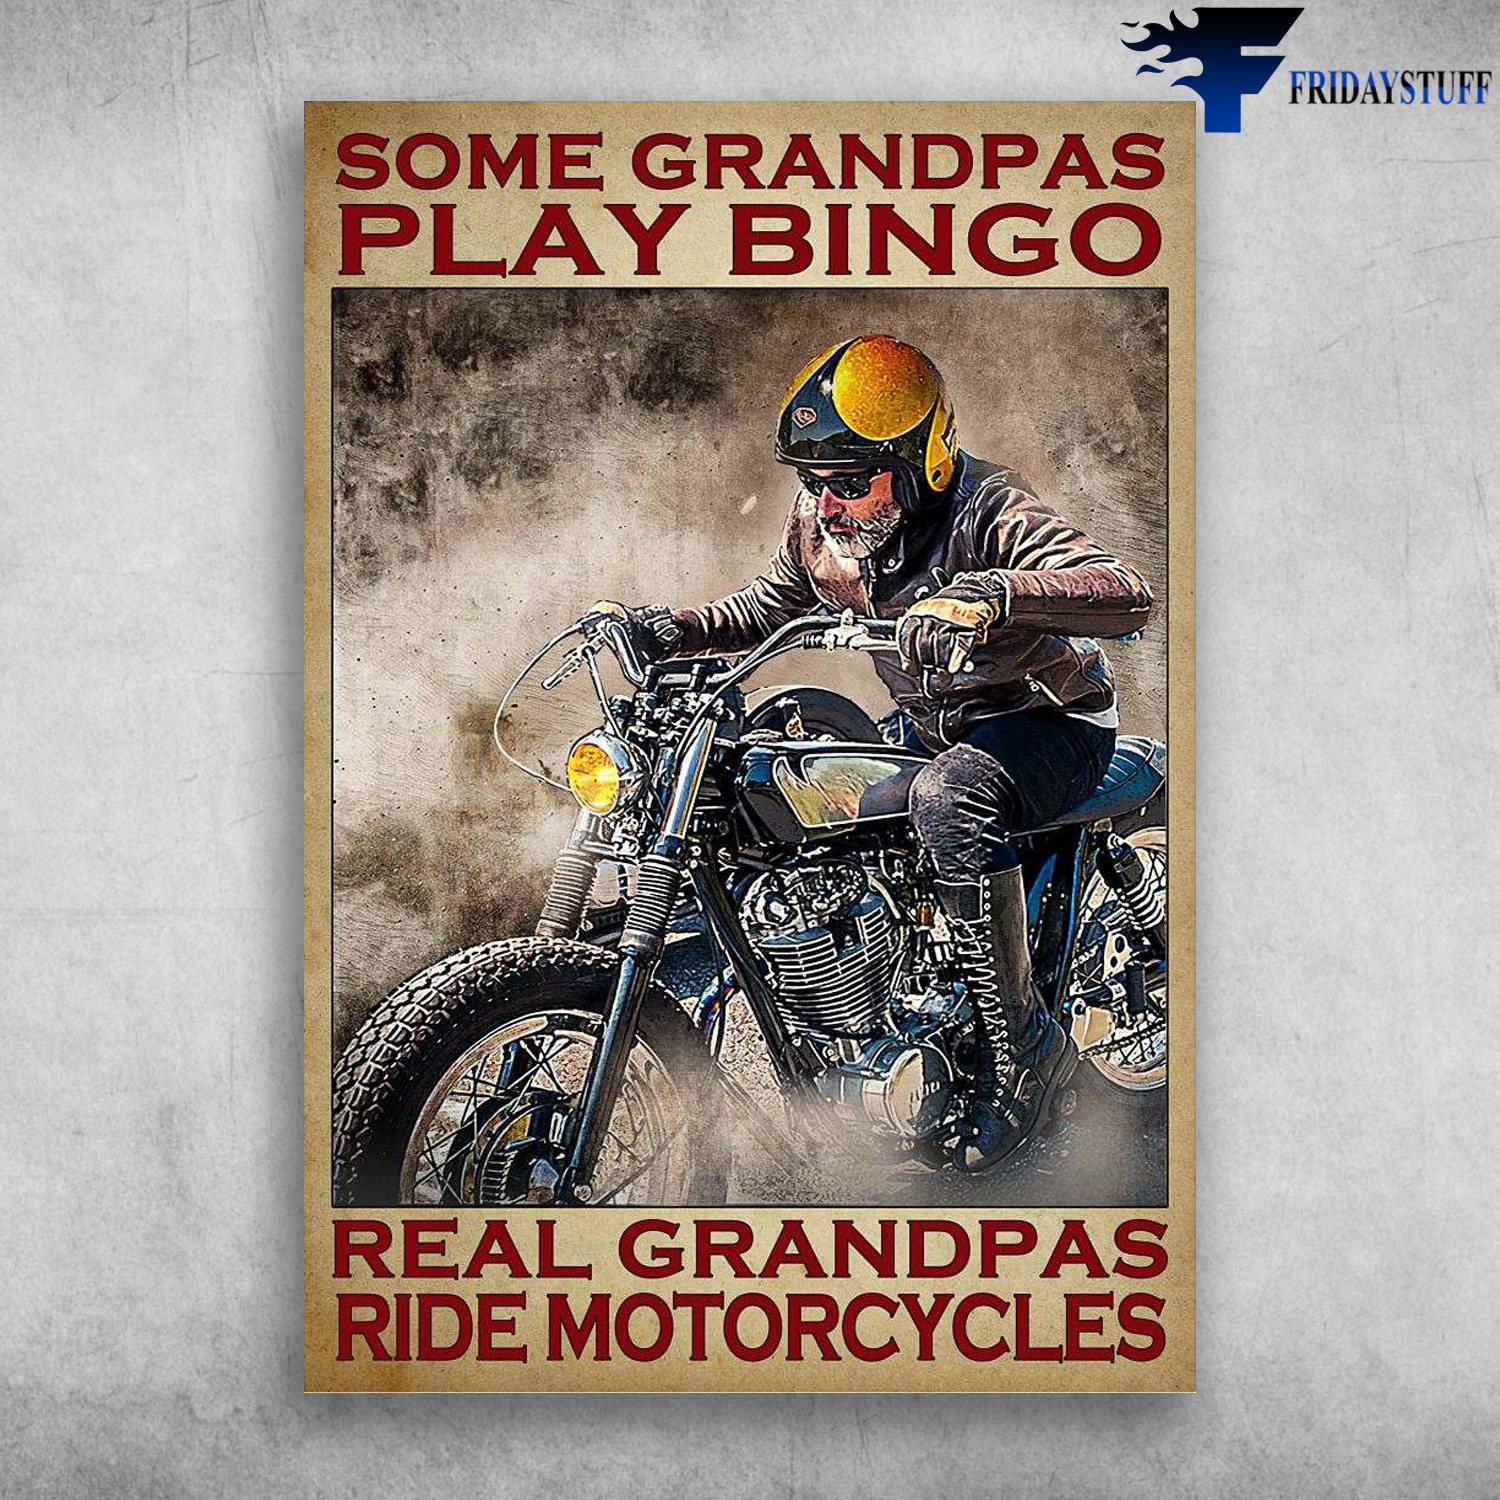 Old Man Riding, Motorcycle Man - Some Grandpas Play Bingo, Real Grandpas, Ride Motorcycles